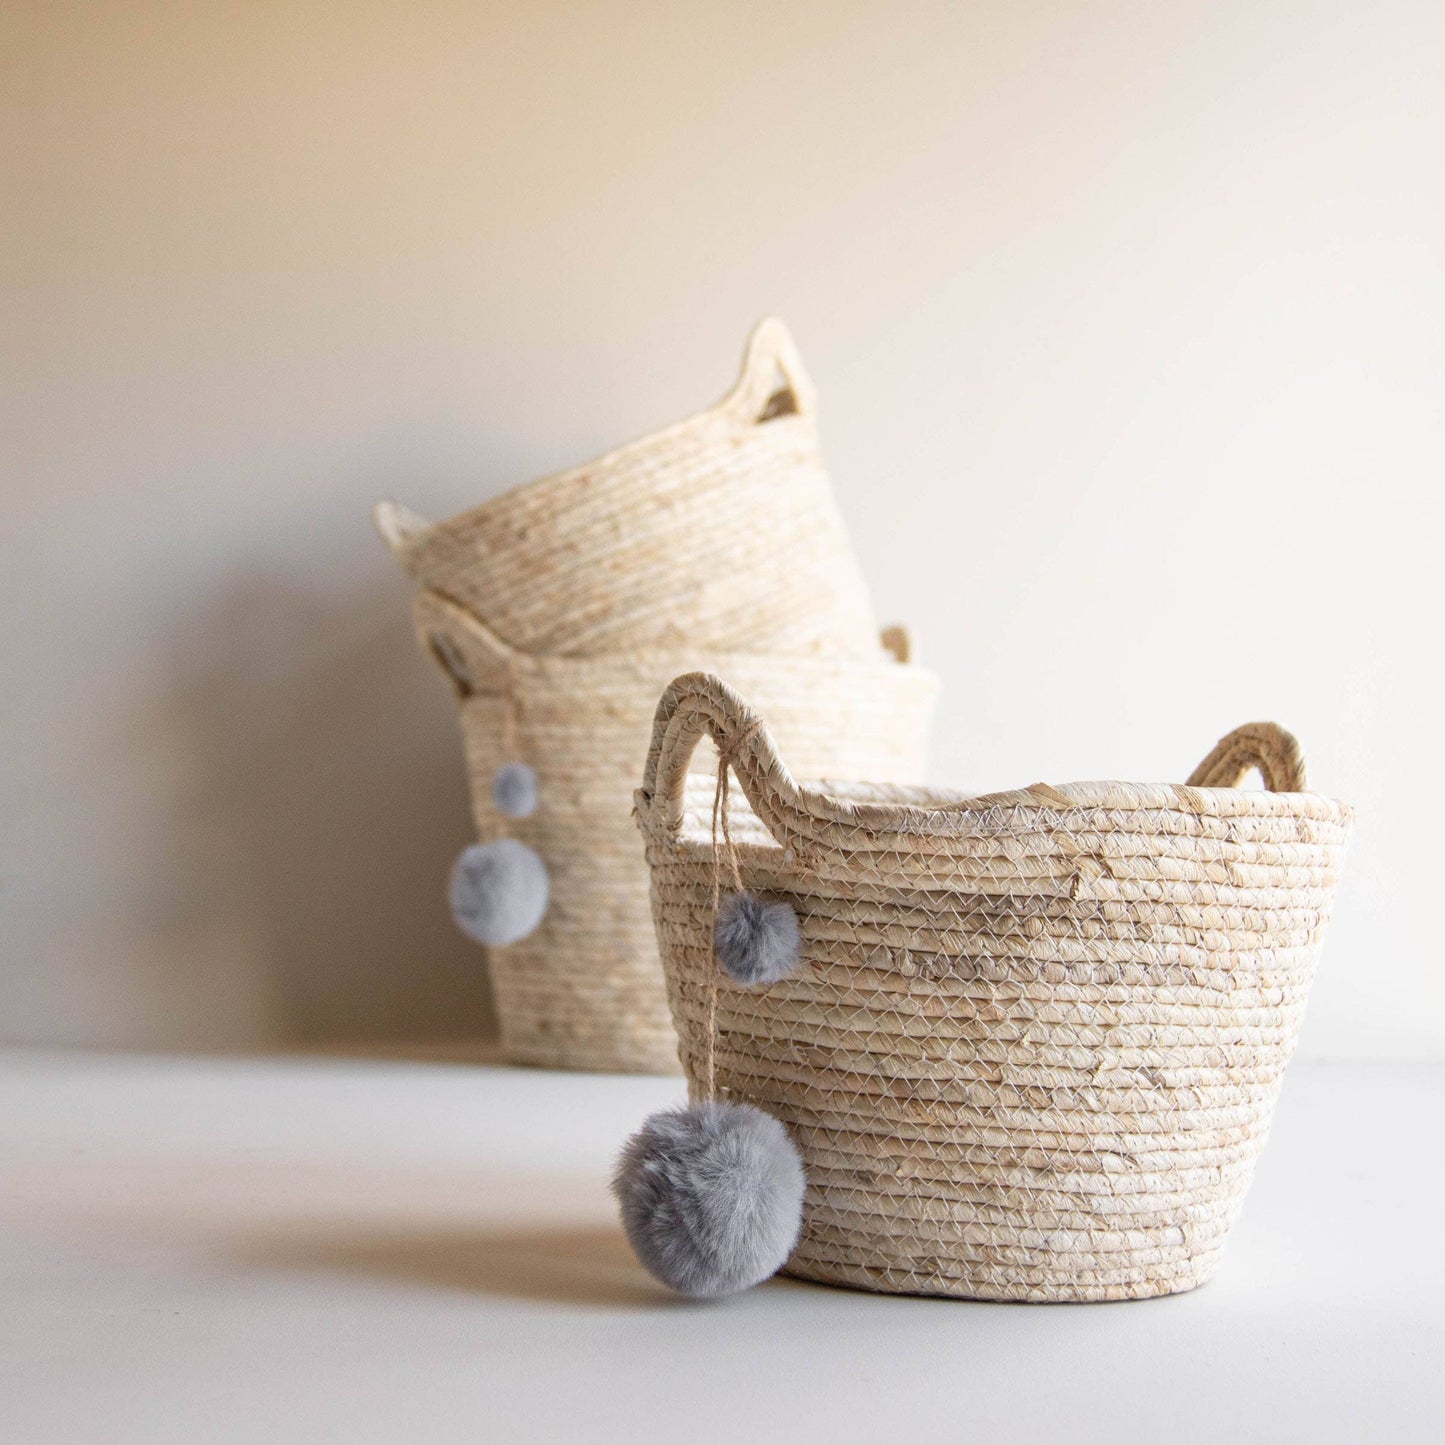 Escape Natural Baskets With Poms | Multiple Sizes